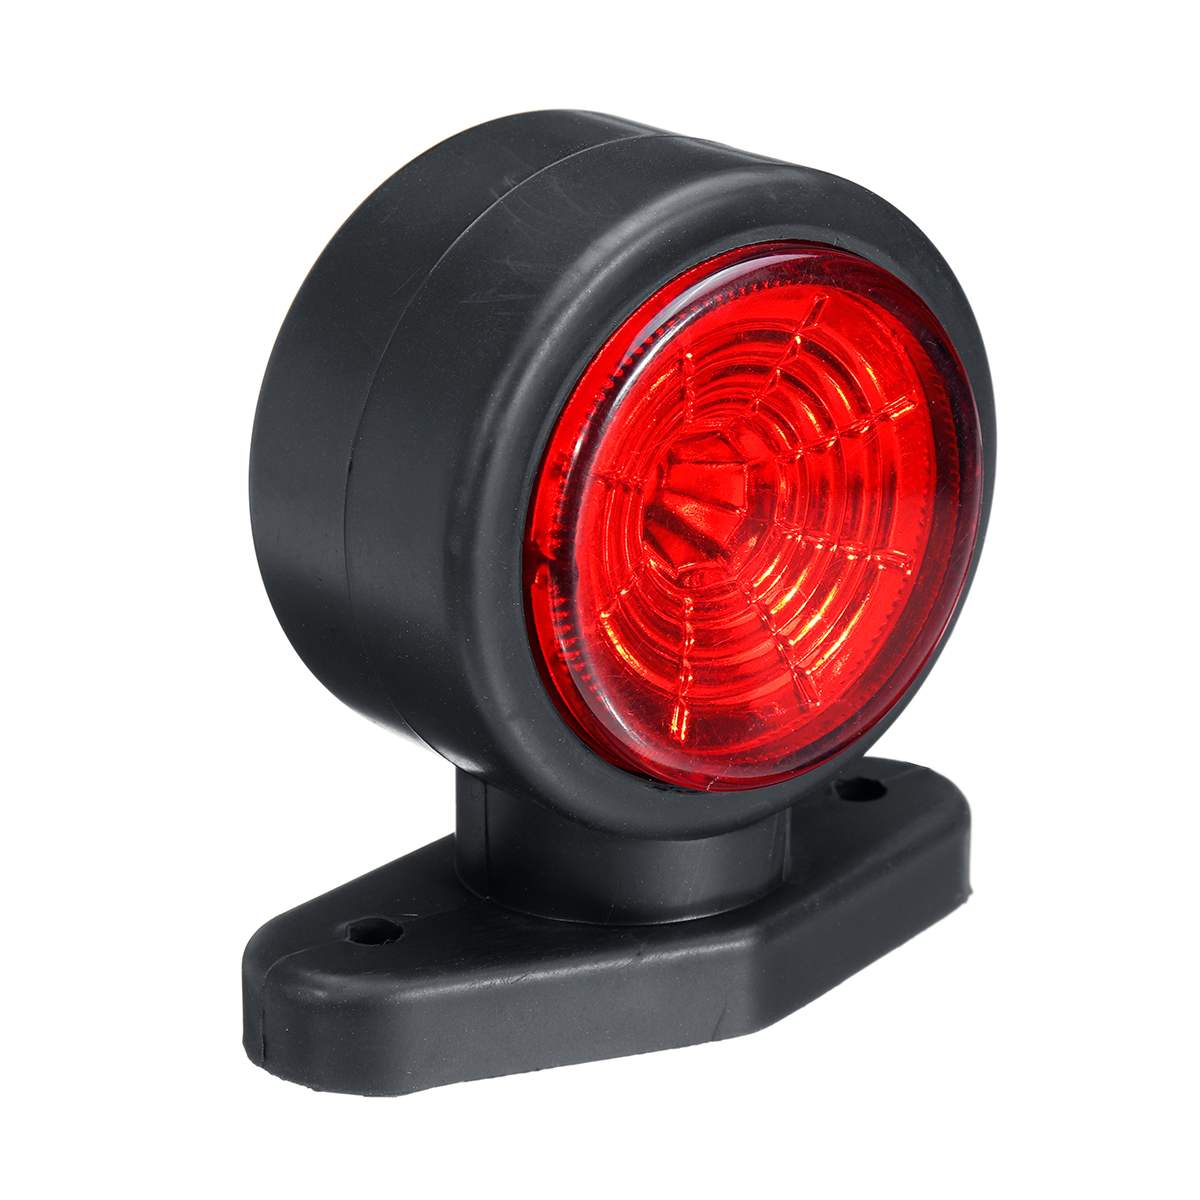 1Pc single 12 - 24v LED Universal Car Truck Side Marker Light Lights Indicator Signal Lamp Red White For Camper Trailer Lorry RV